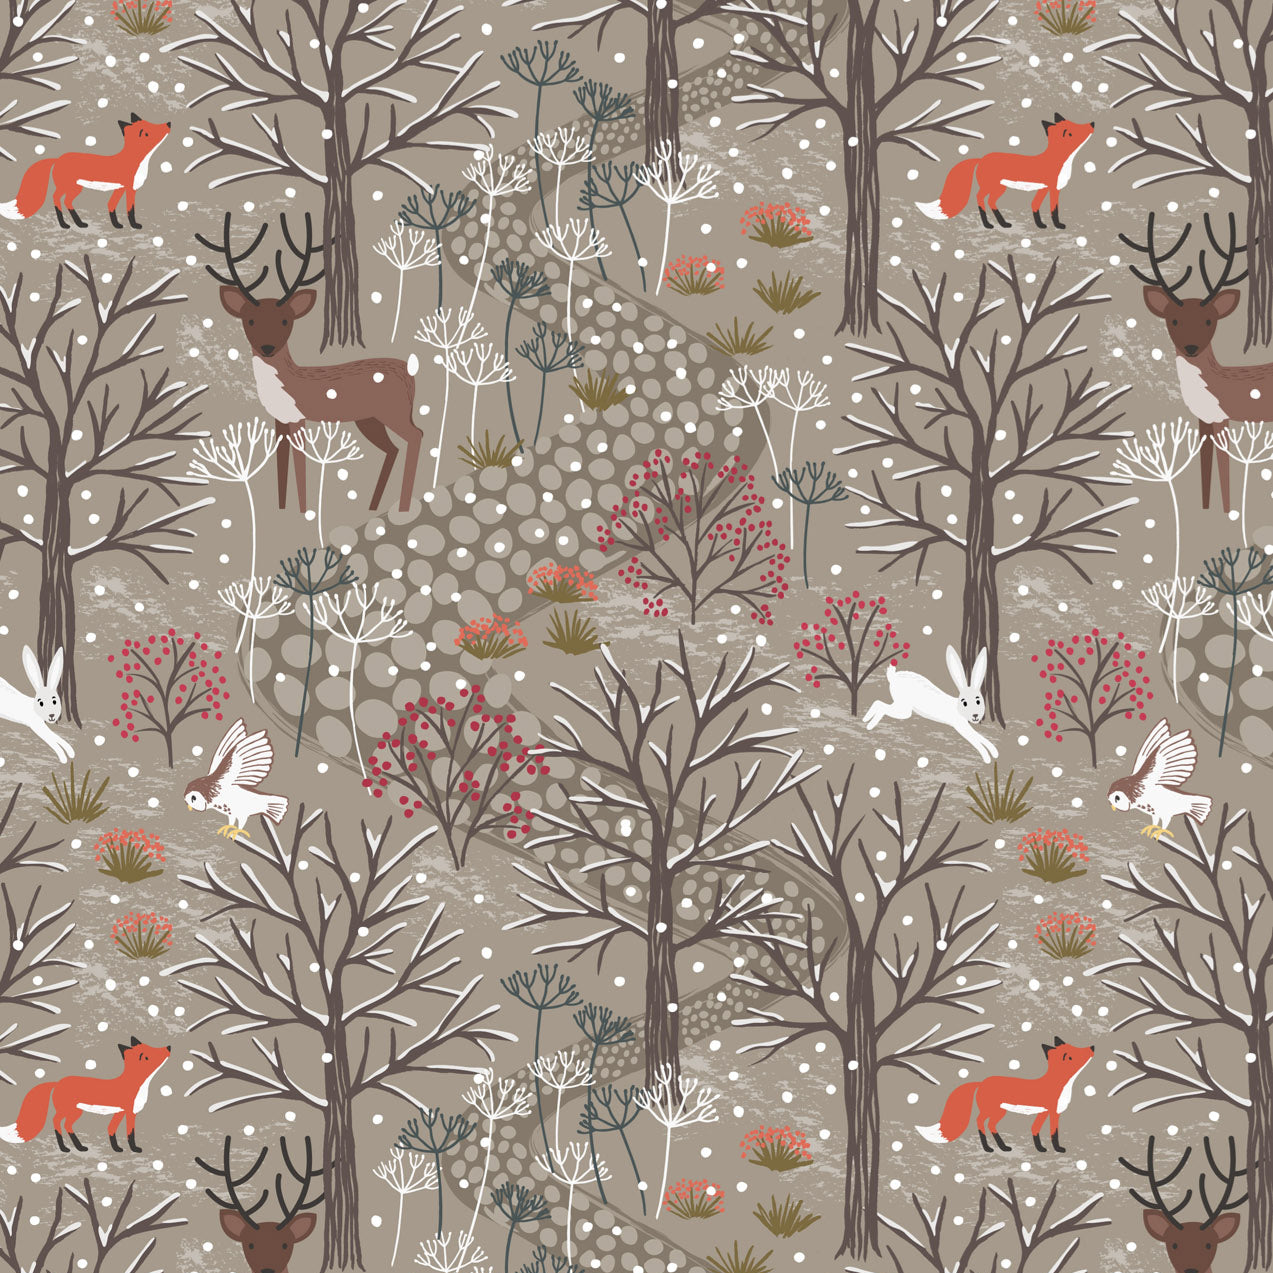 Lewis & Irene Flannel Fabric - Winter in Bluebell Wood - Light chestnut